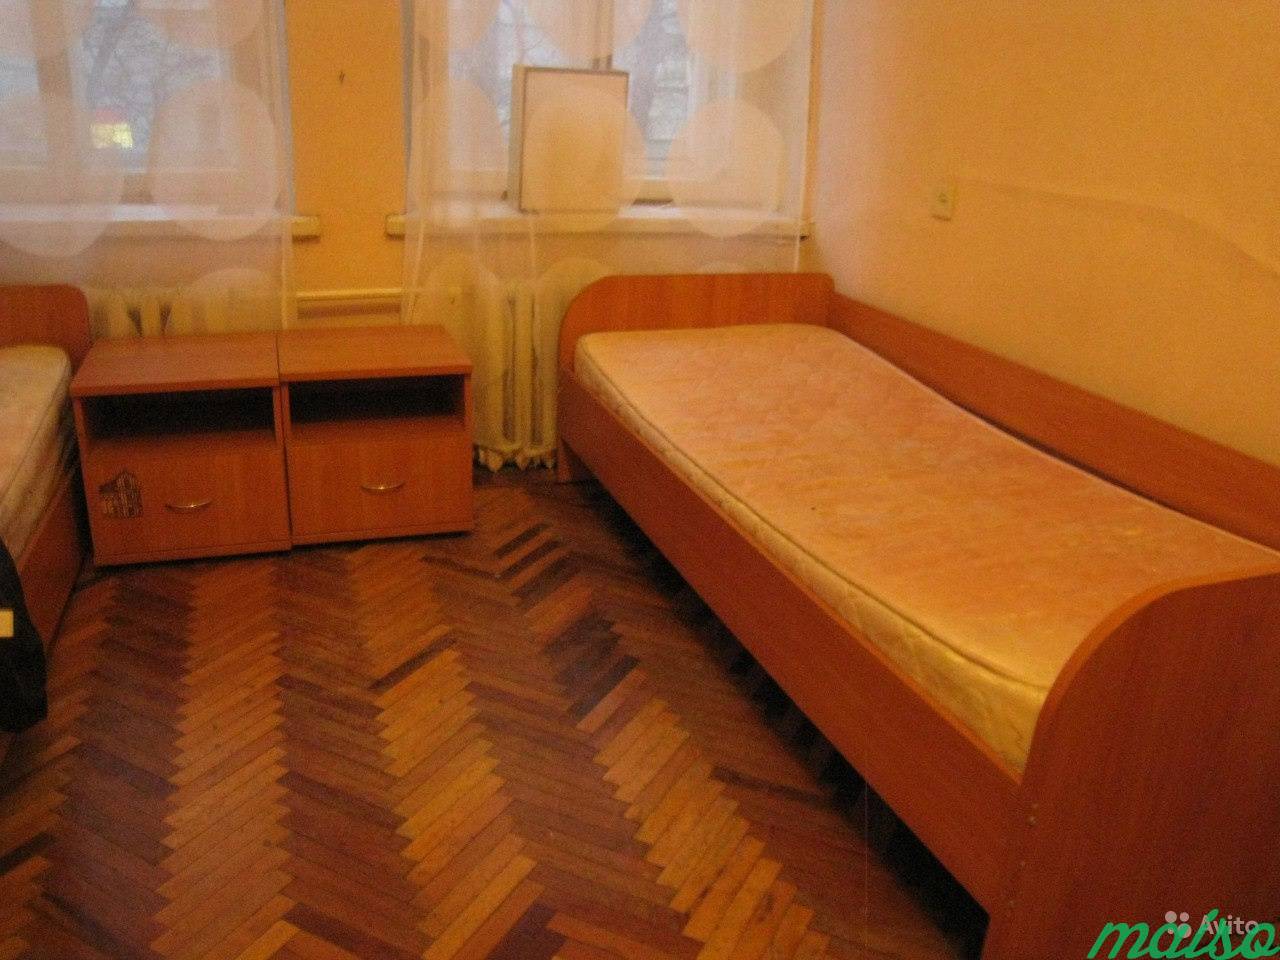 Комната 18 м² в 5-к, 2/5 эт. в Санкт-Петербурге. Фото 3